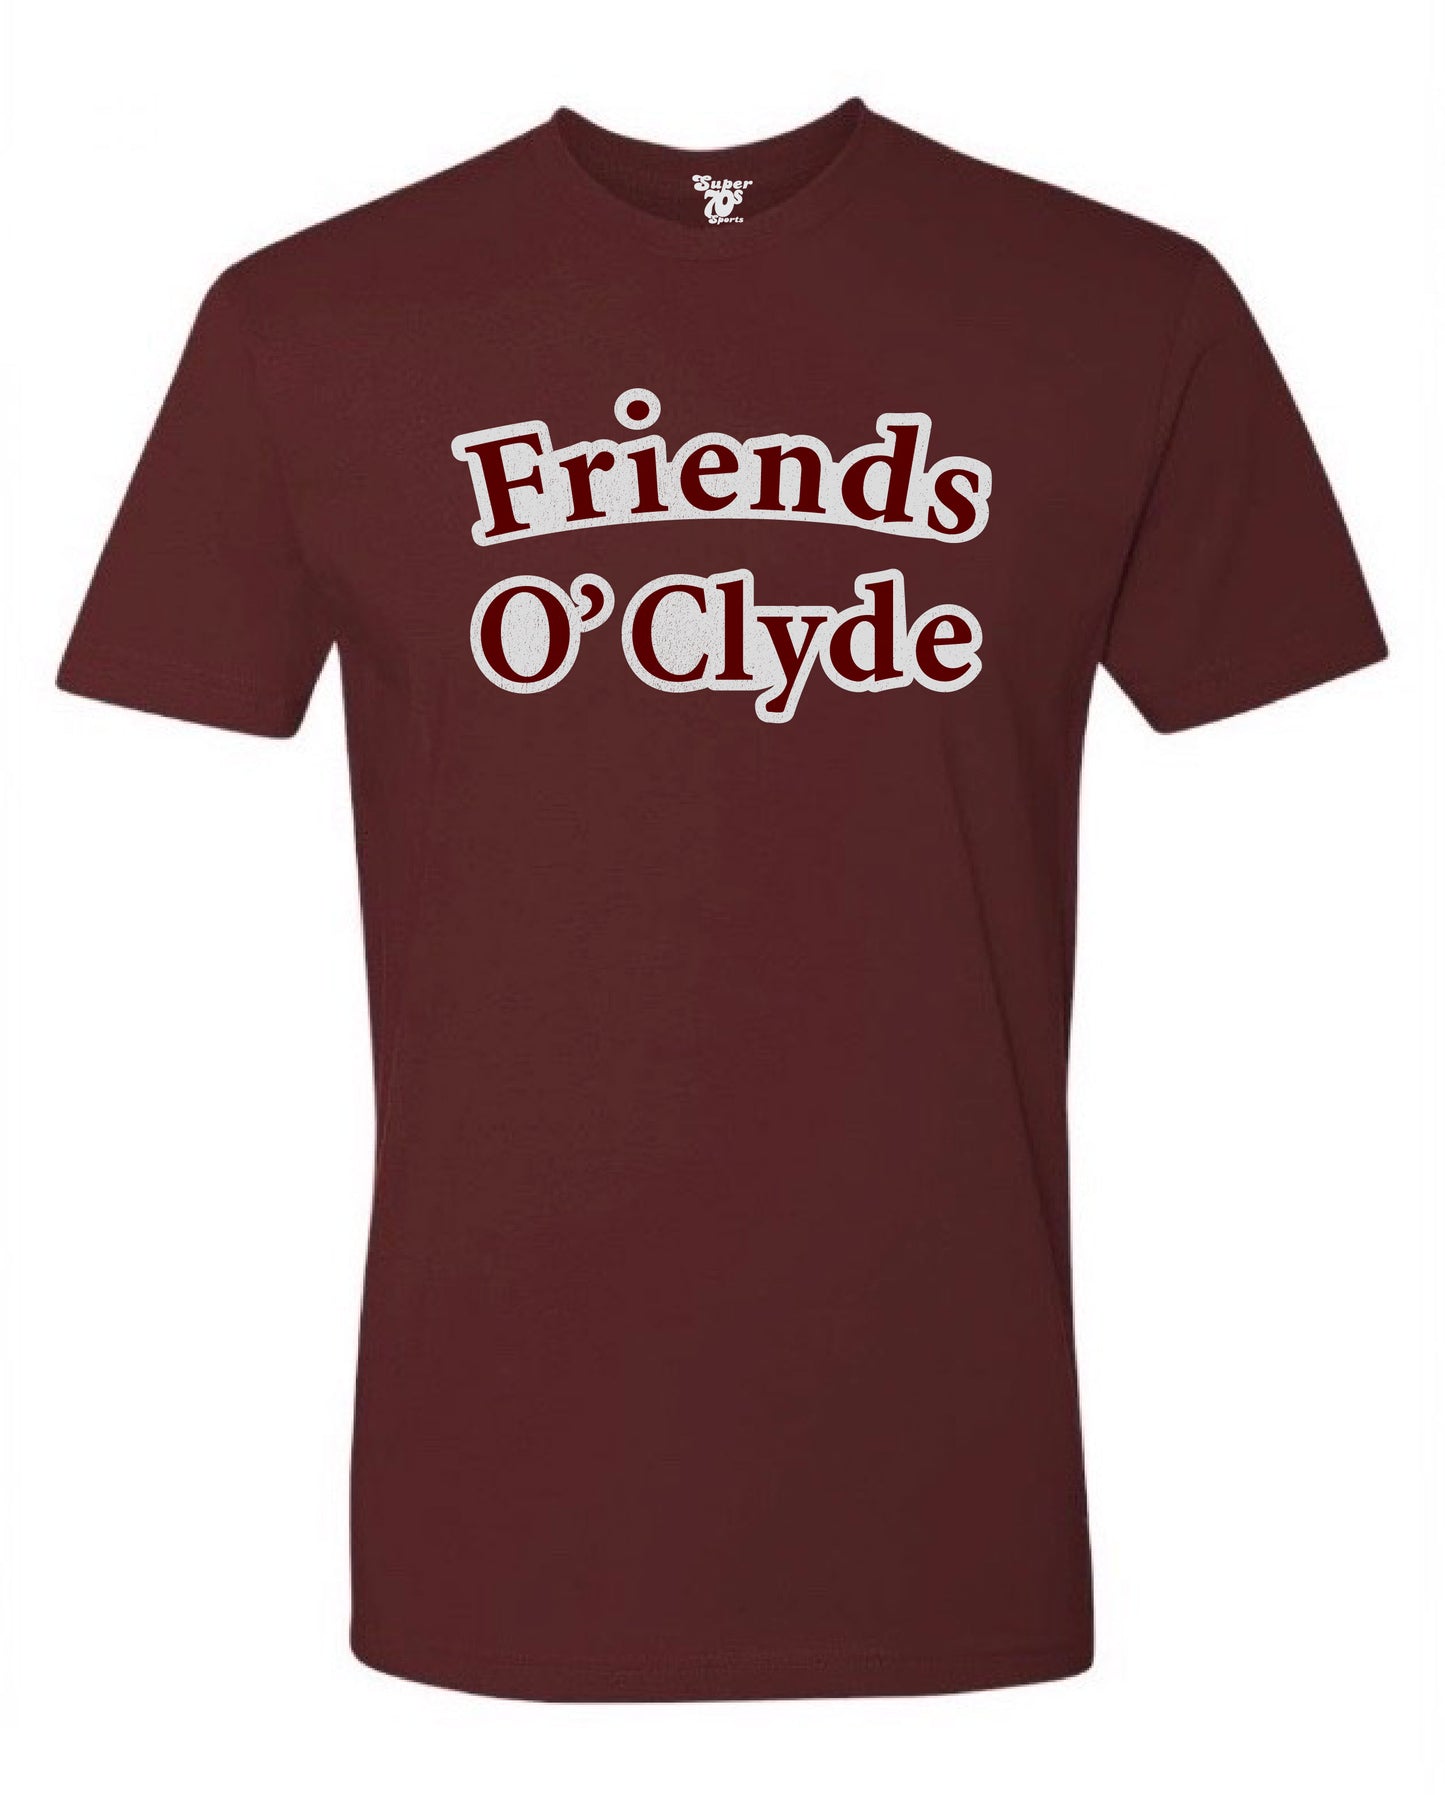 Friends O'Clyde Tee